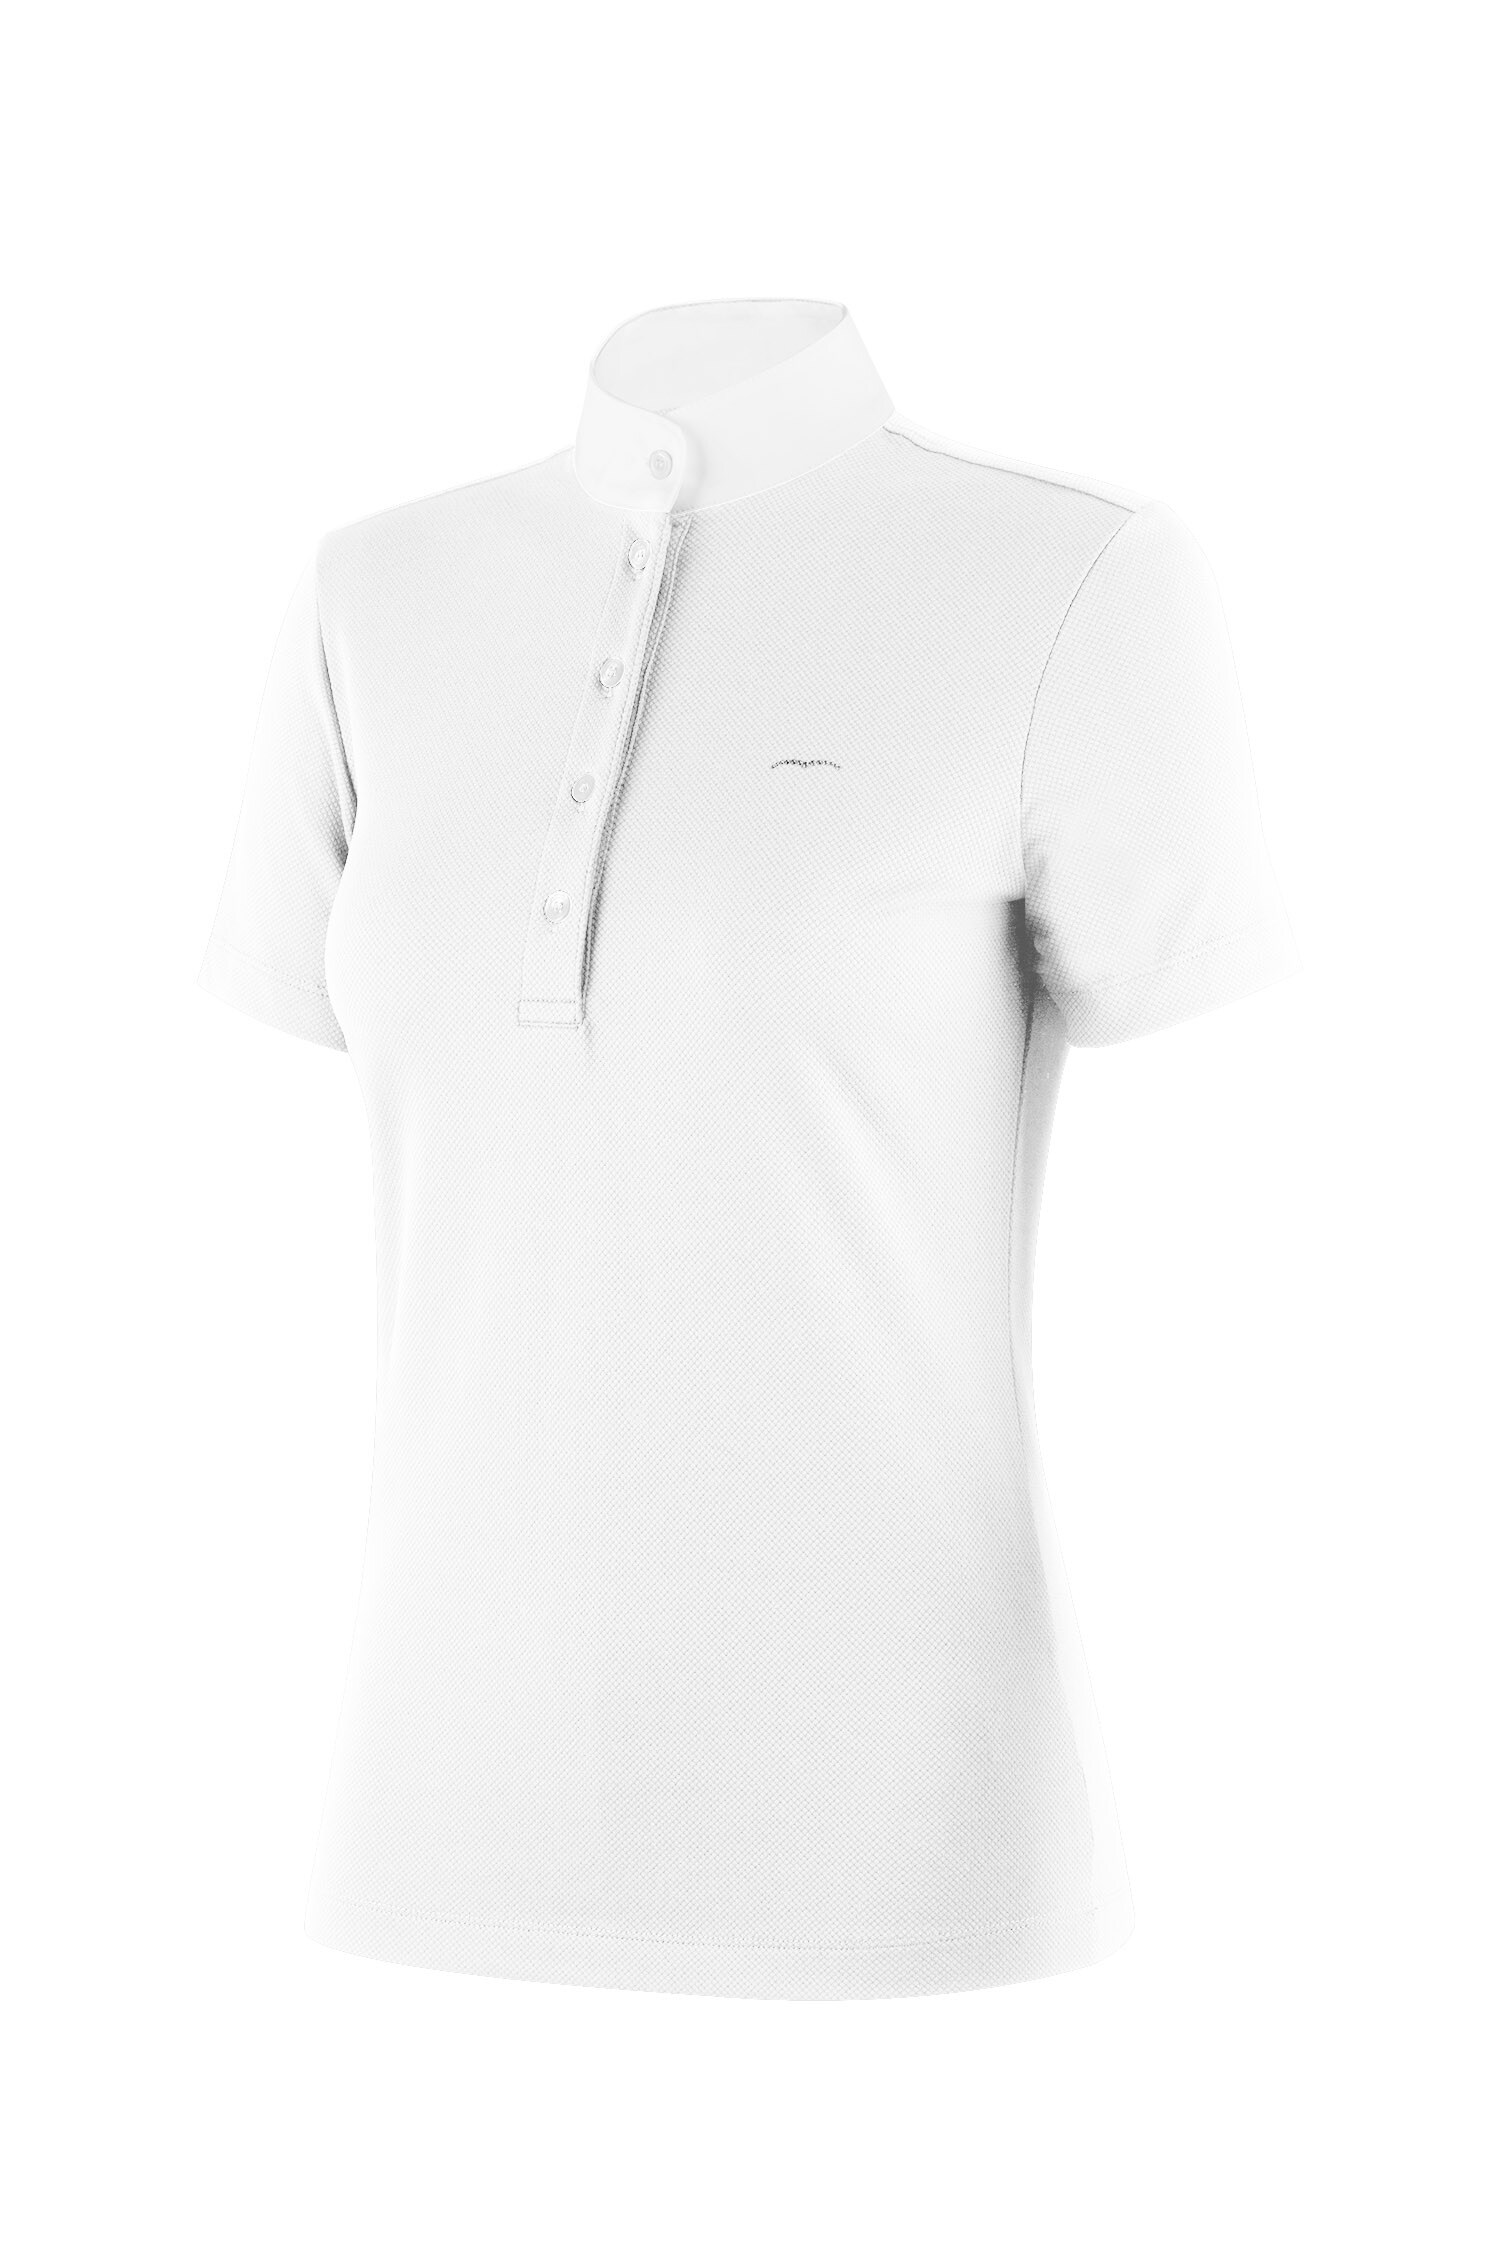 Basilea Turniershirt - Weiß